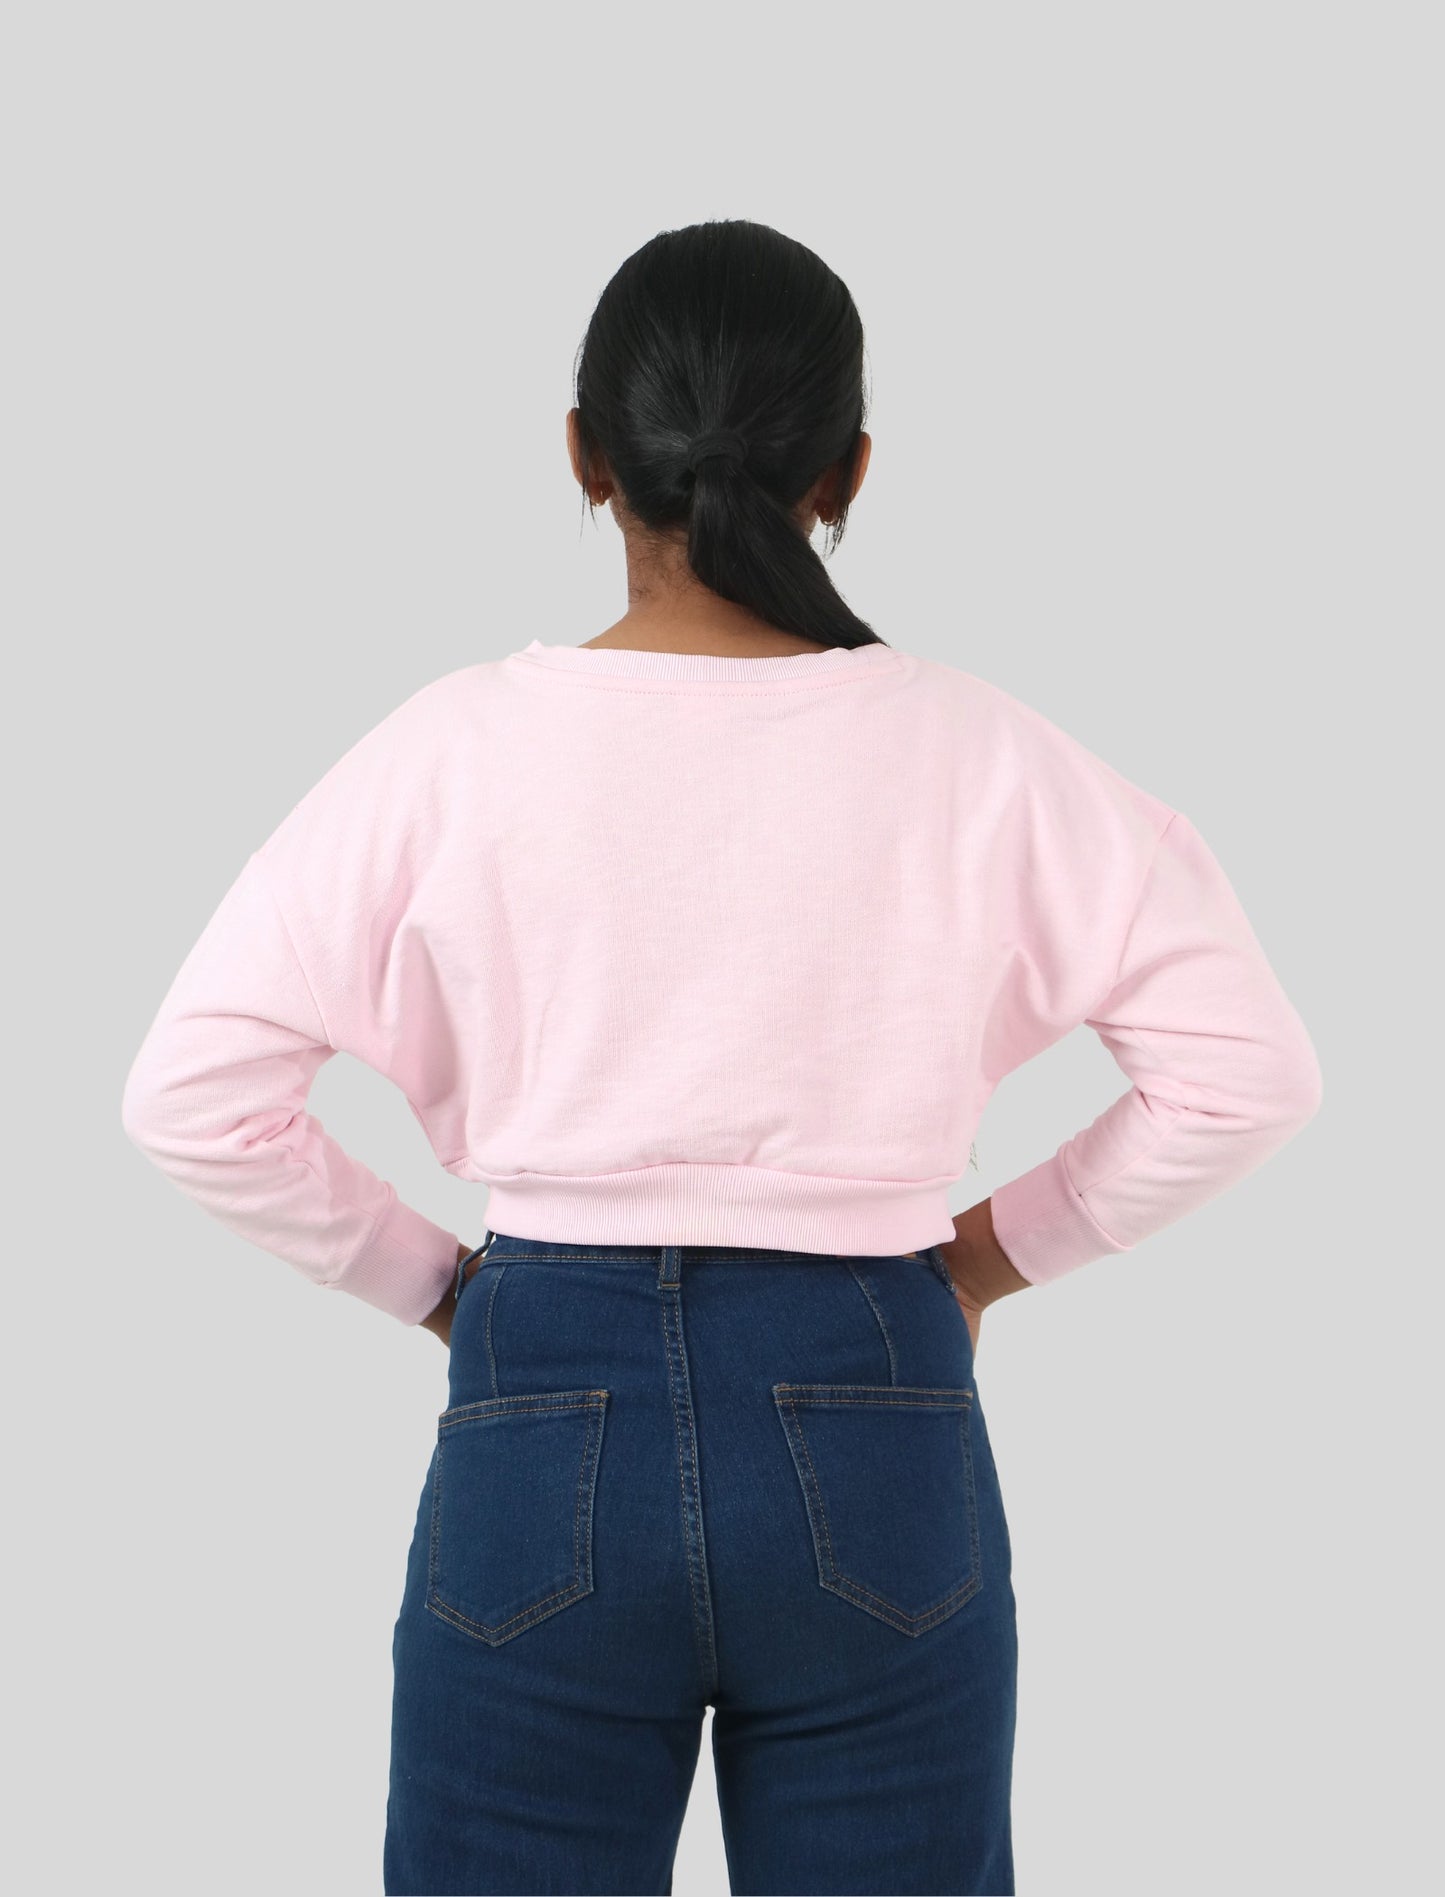 Girls Kids Full Sleeve Cropped Printed Winter Sweatshirt (Light Pink)